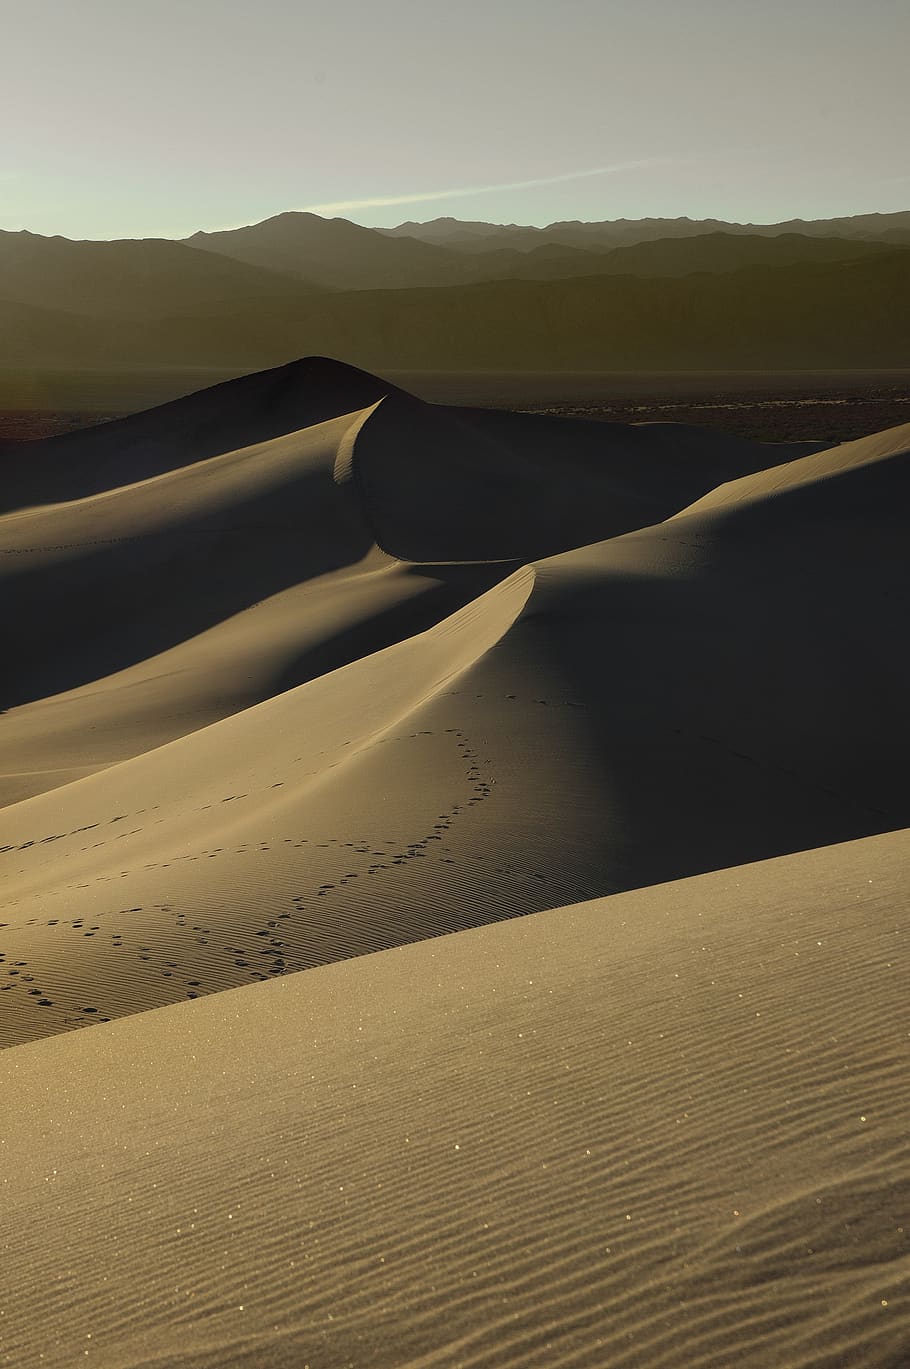 death valley, california, desert, sand, dunes, nature, dry, landscape, mountains, hot